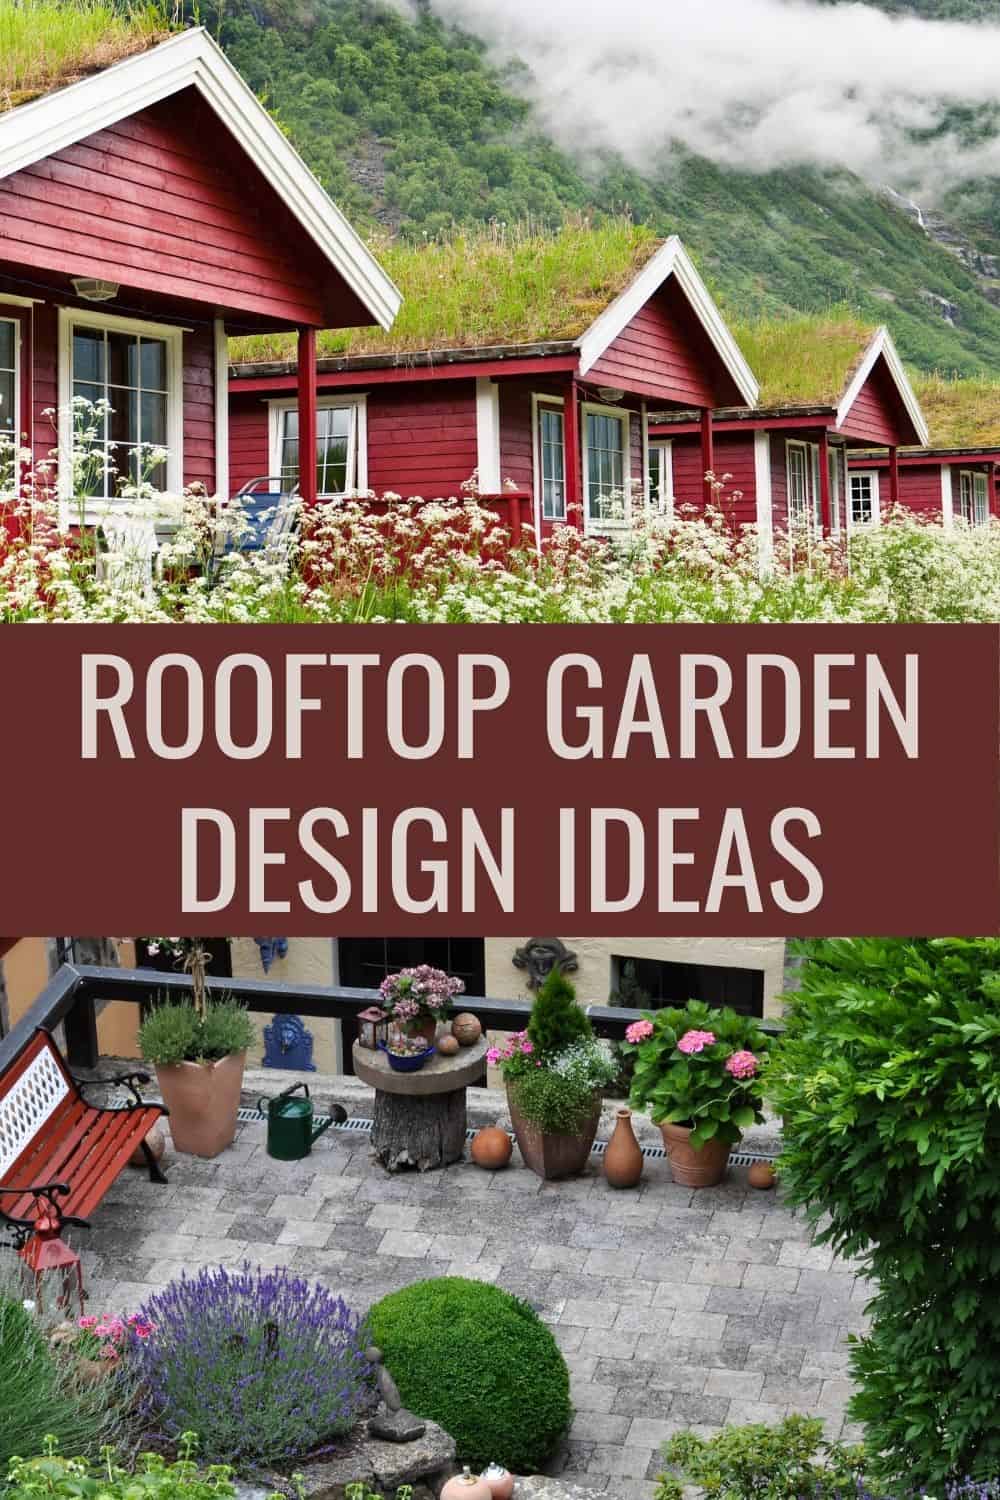 Rooftop garden design ideas